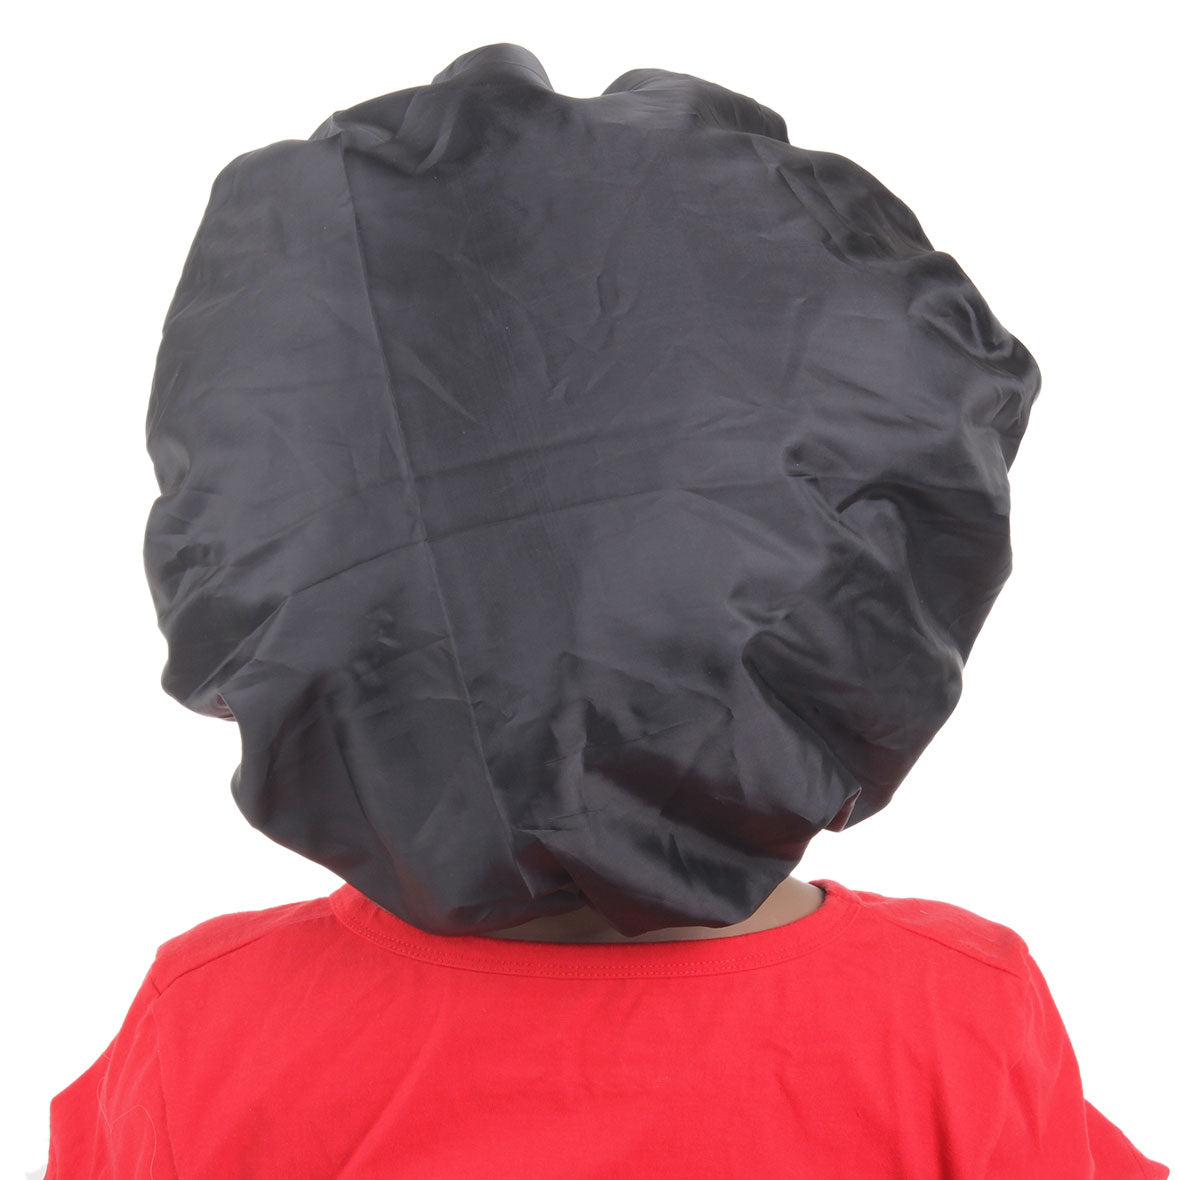 Big Size Satin Sleep Cap High Quality Waterproof Shower Cap Protect Hair Women Hair Treatment Hat Black